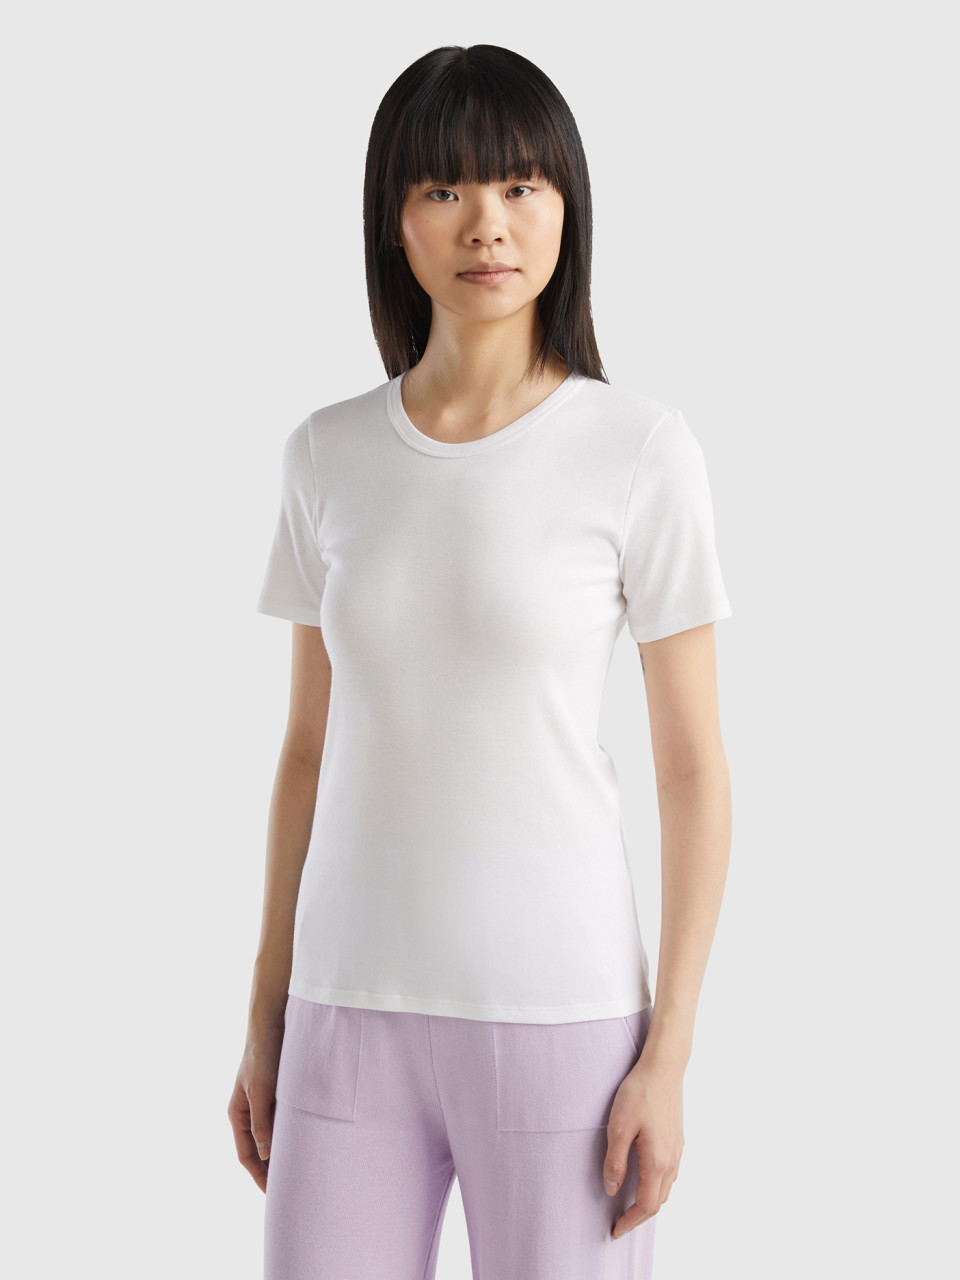 Benetton, Long Fiber Cotton T-shirt, White, Women